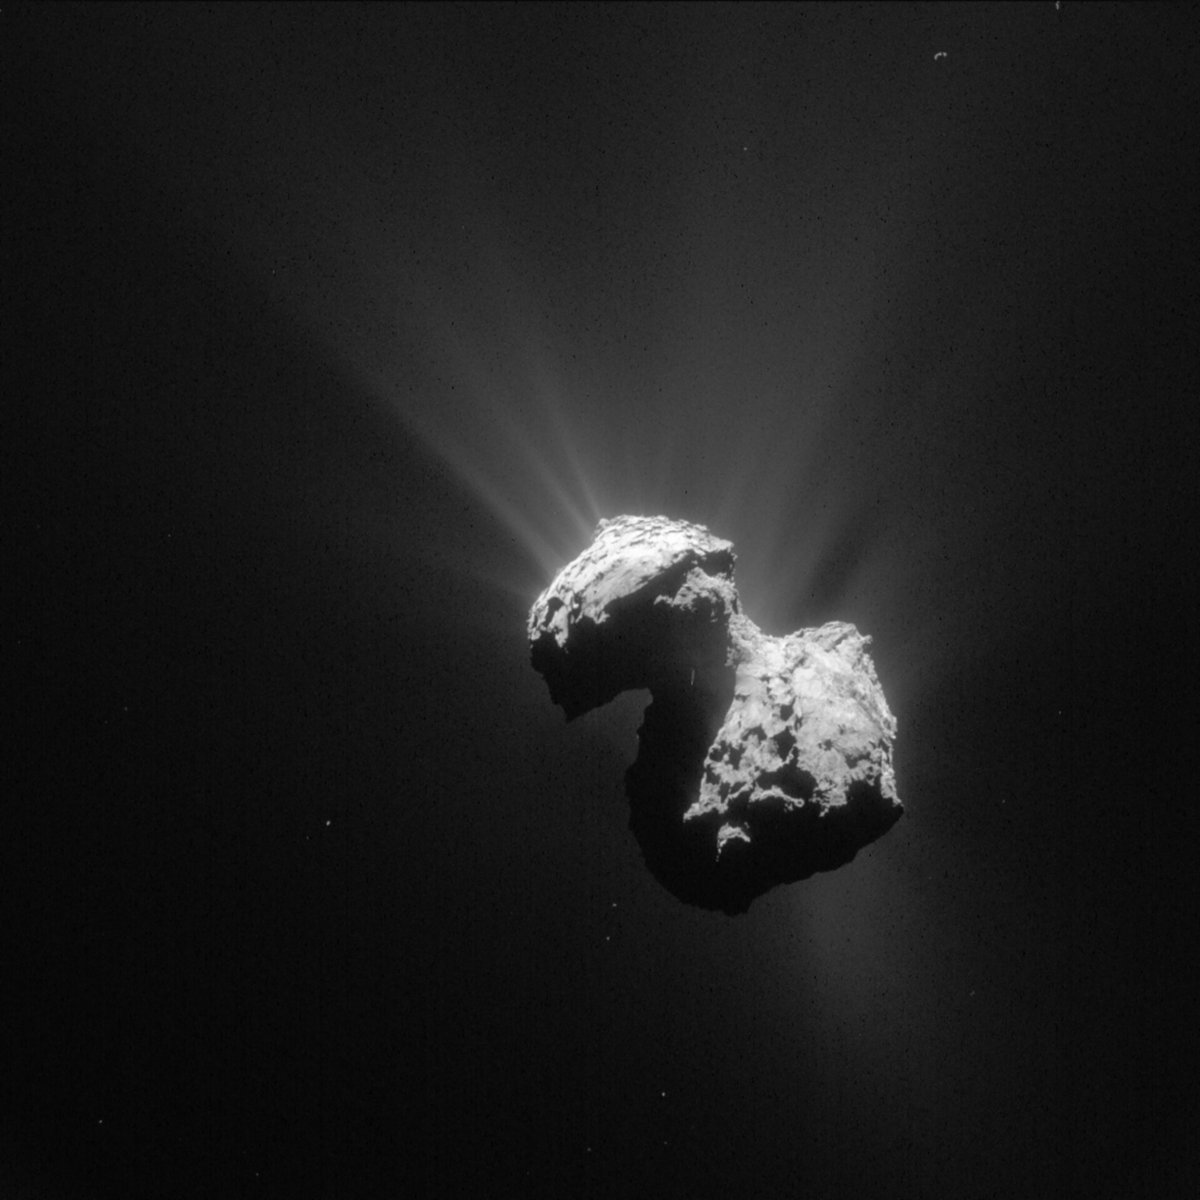 Rosetta 67p NavCam 1 © ESA/Rosetta/NAVCAM – CC BY-SA IGO 3.0